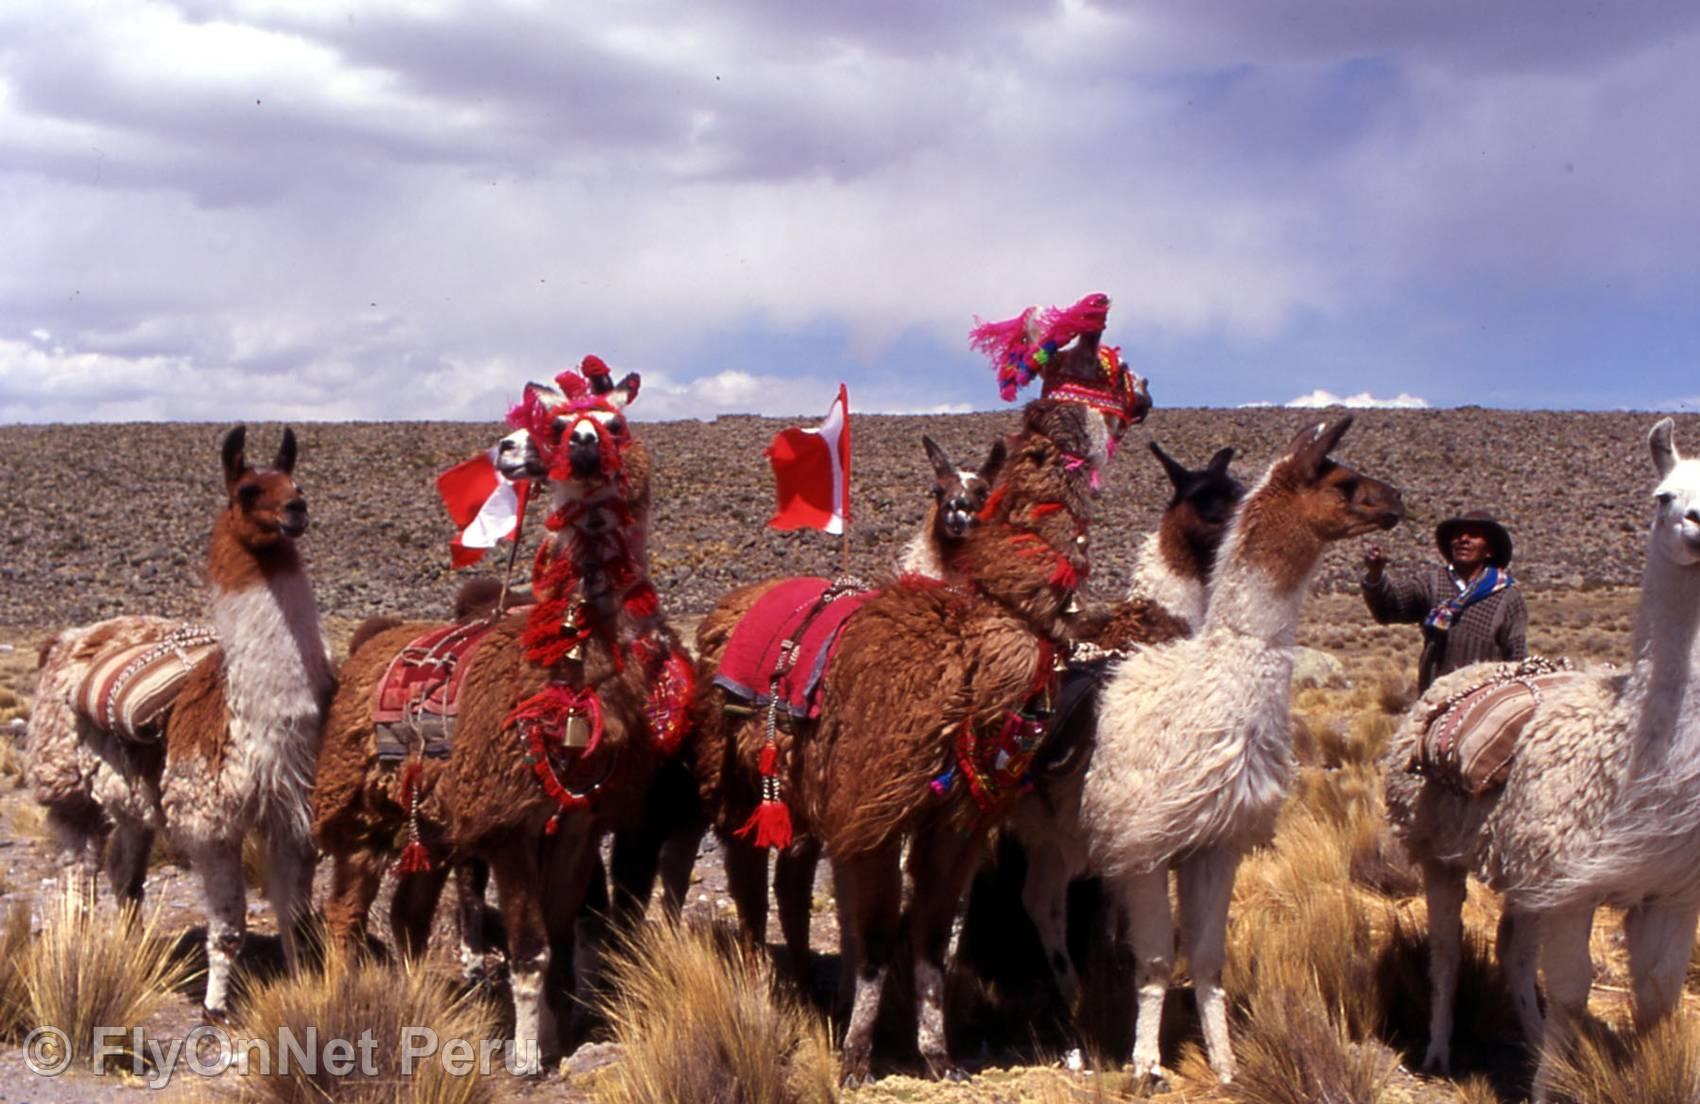 Photo Album: Llamas, Cuzco